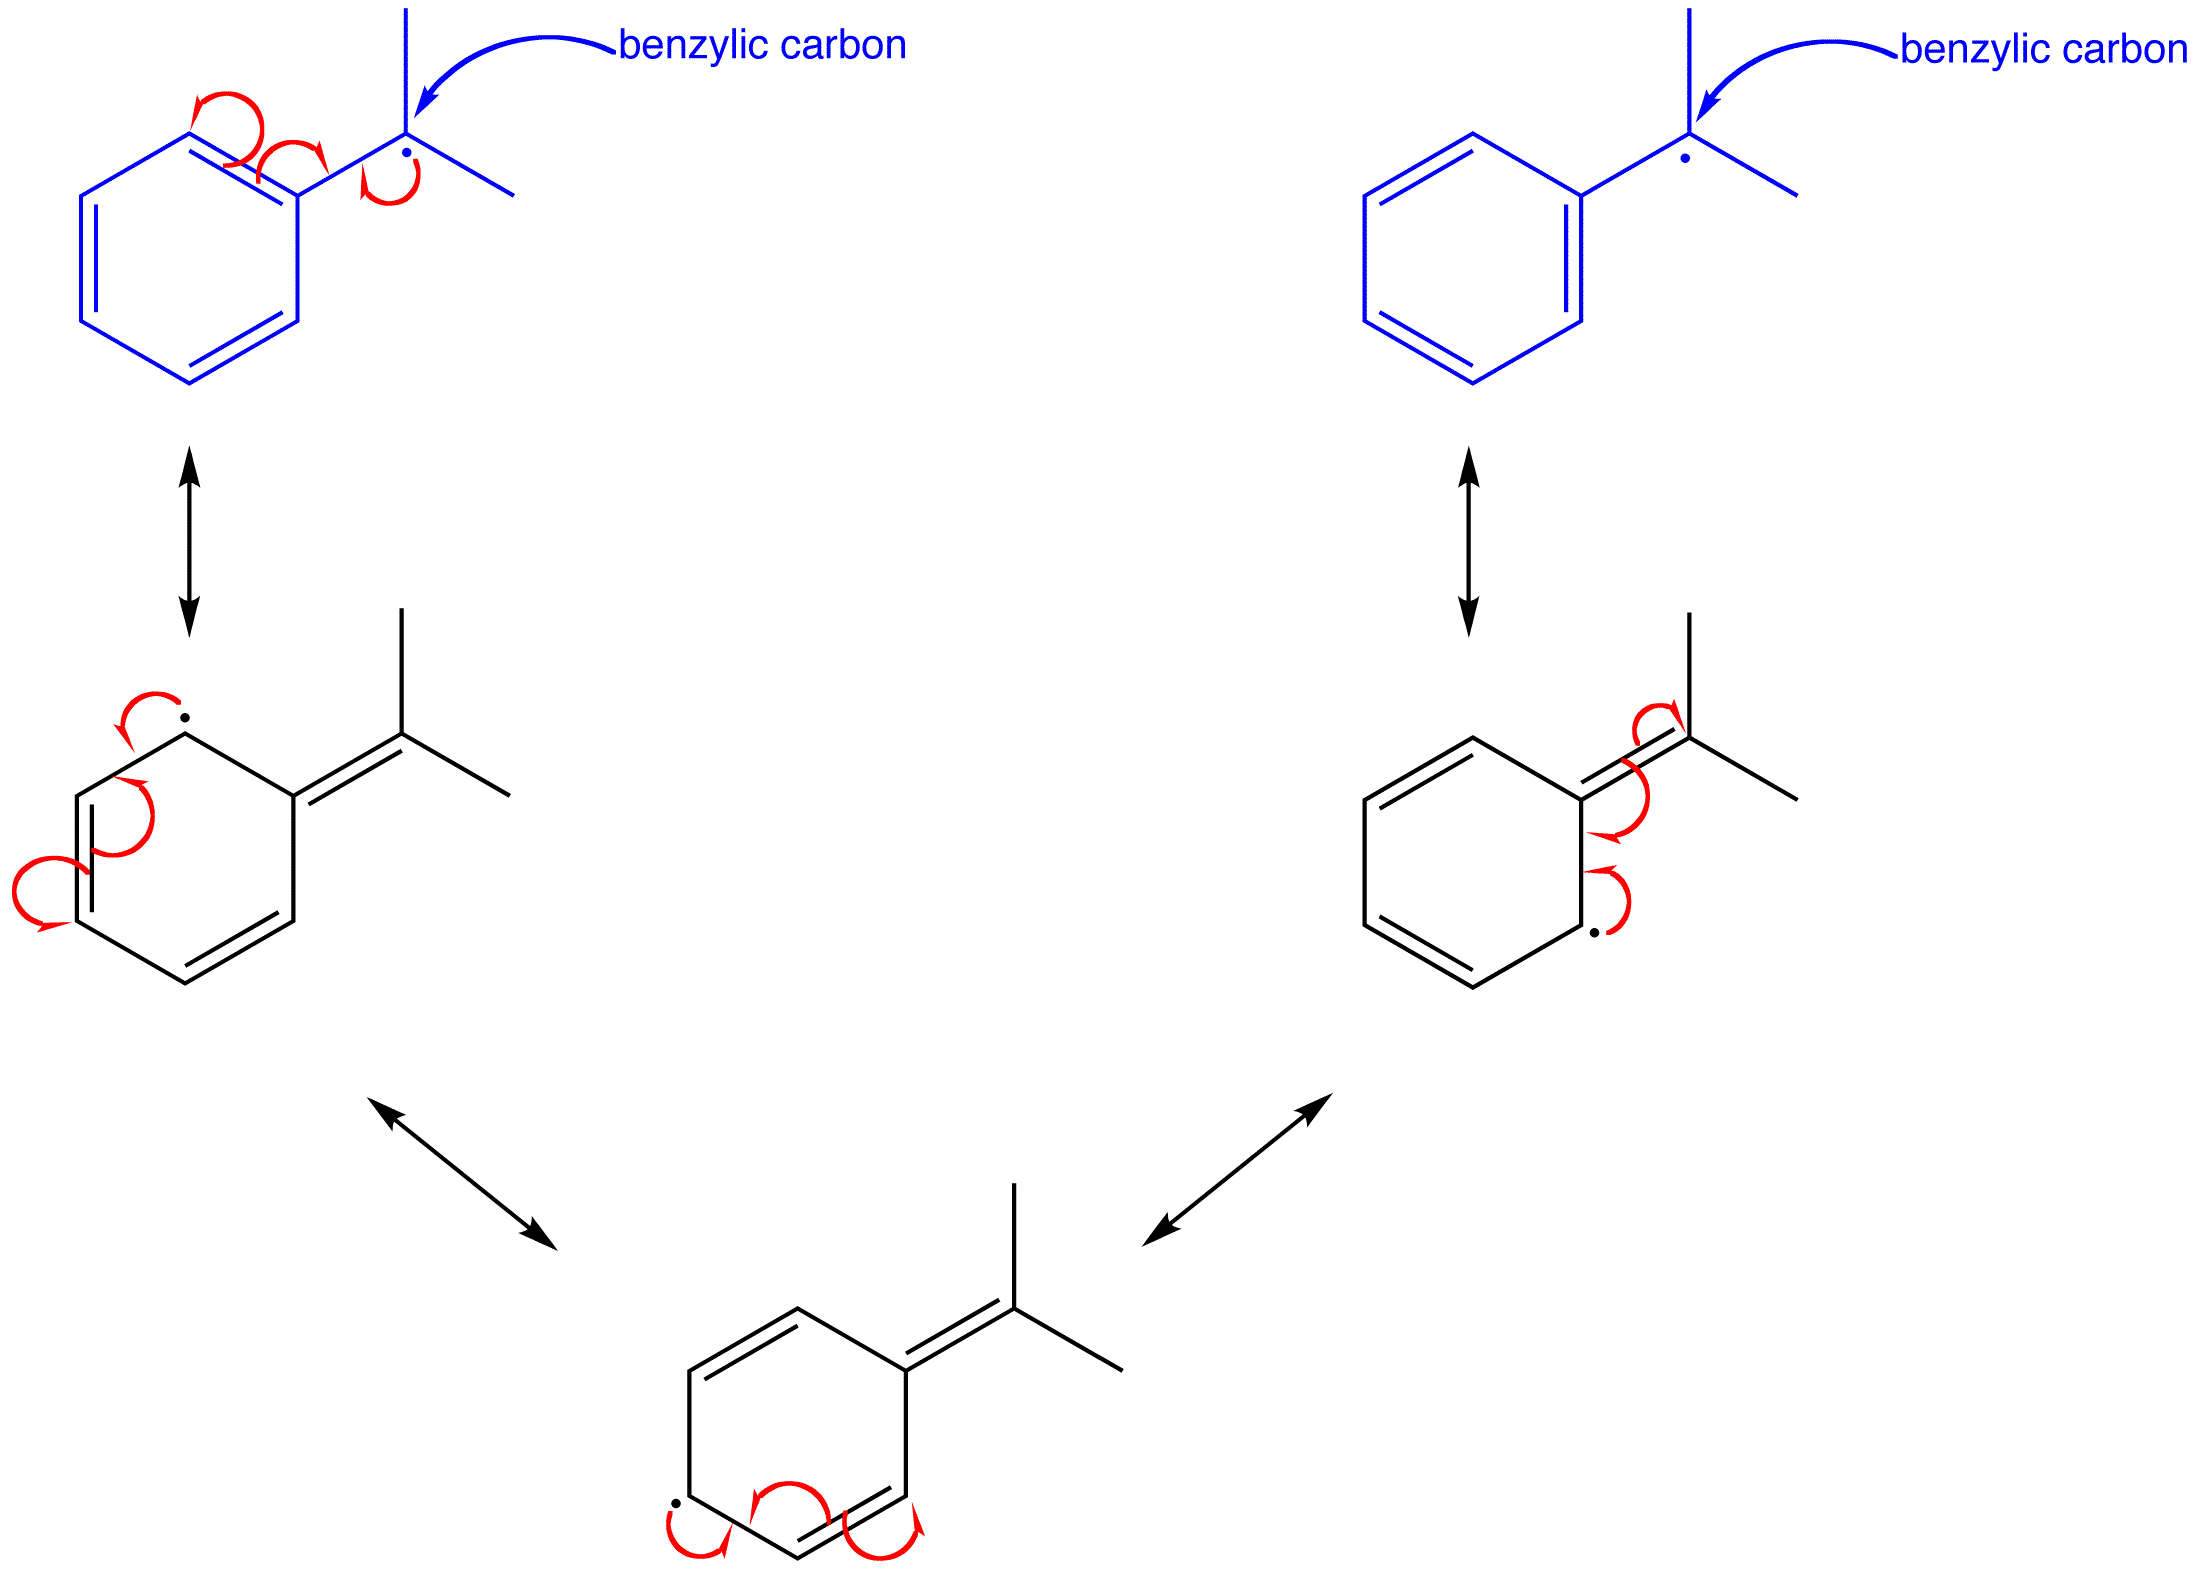 benzylicradical1.png